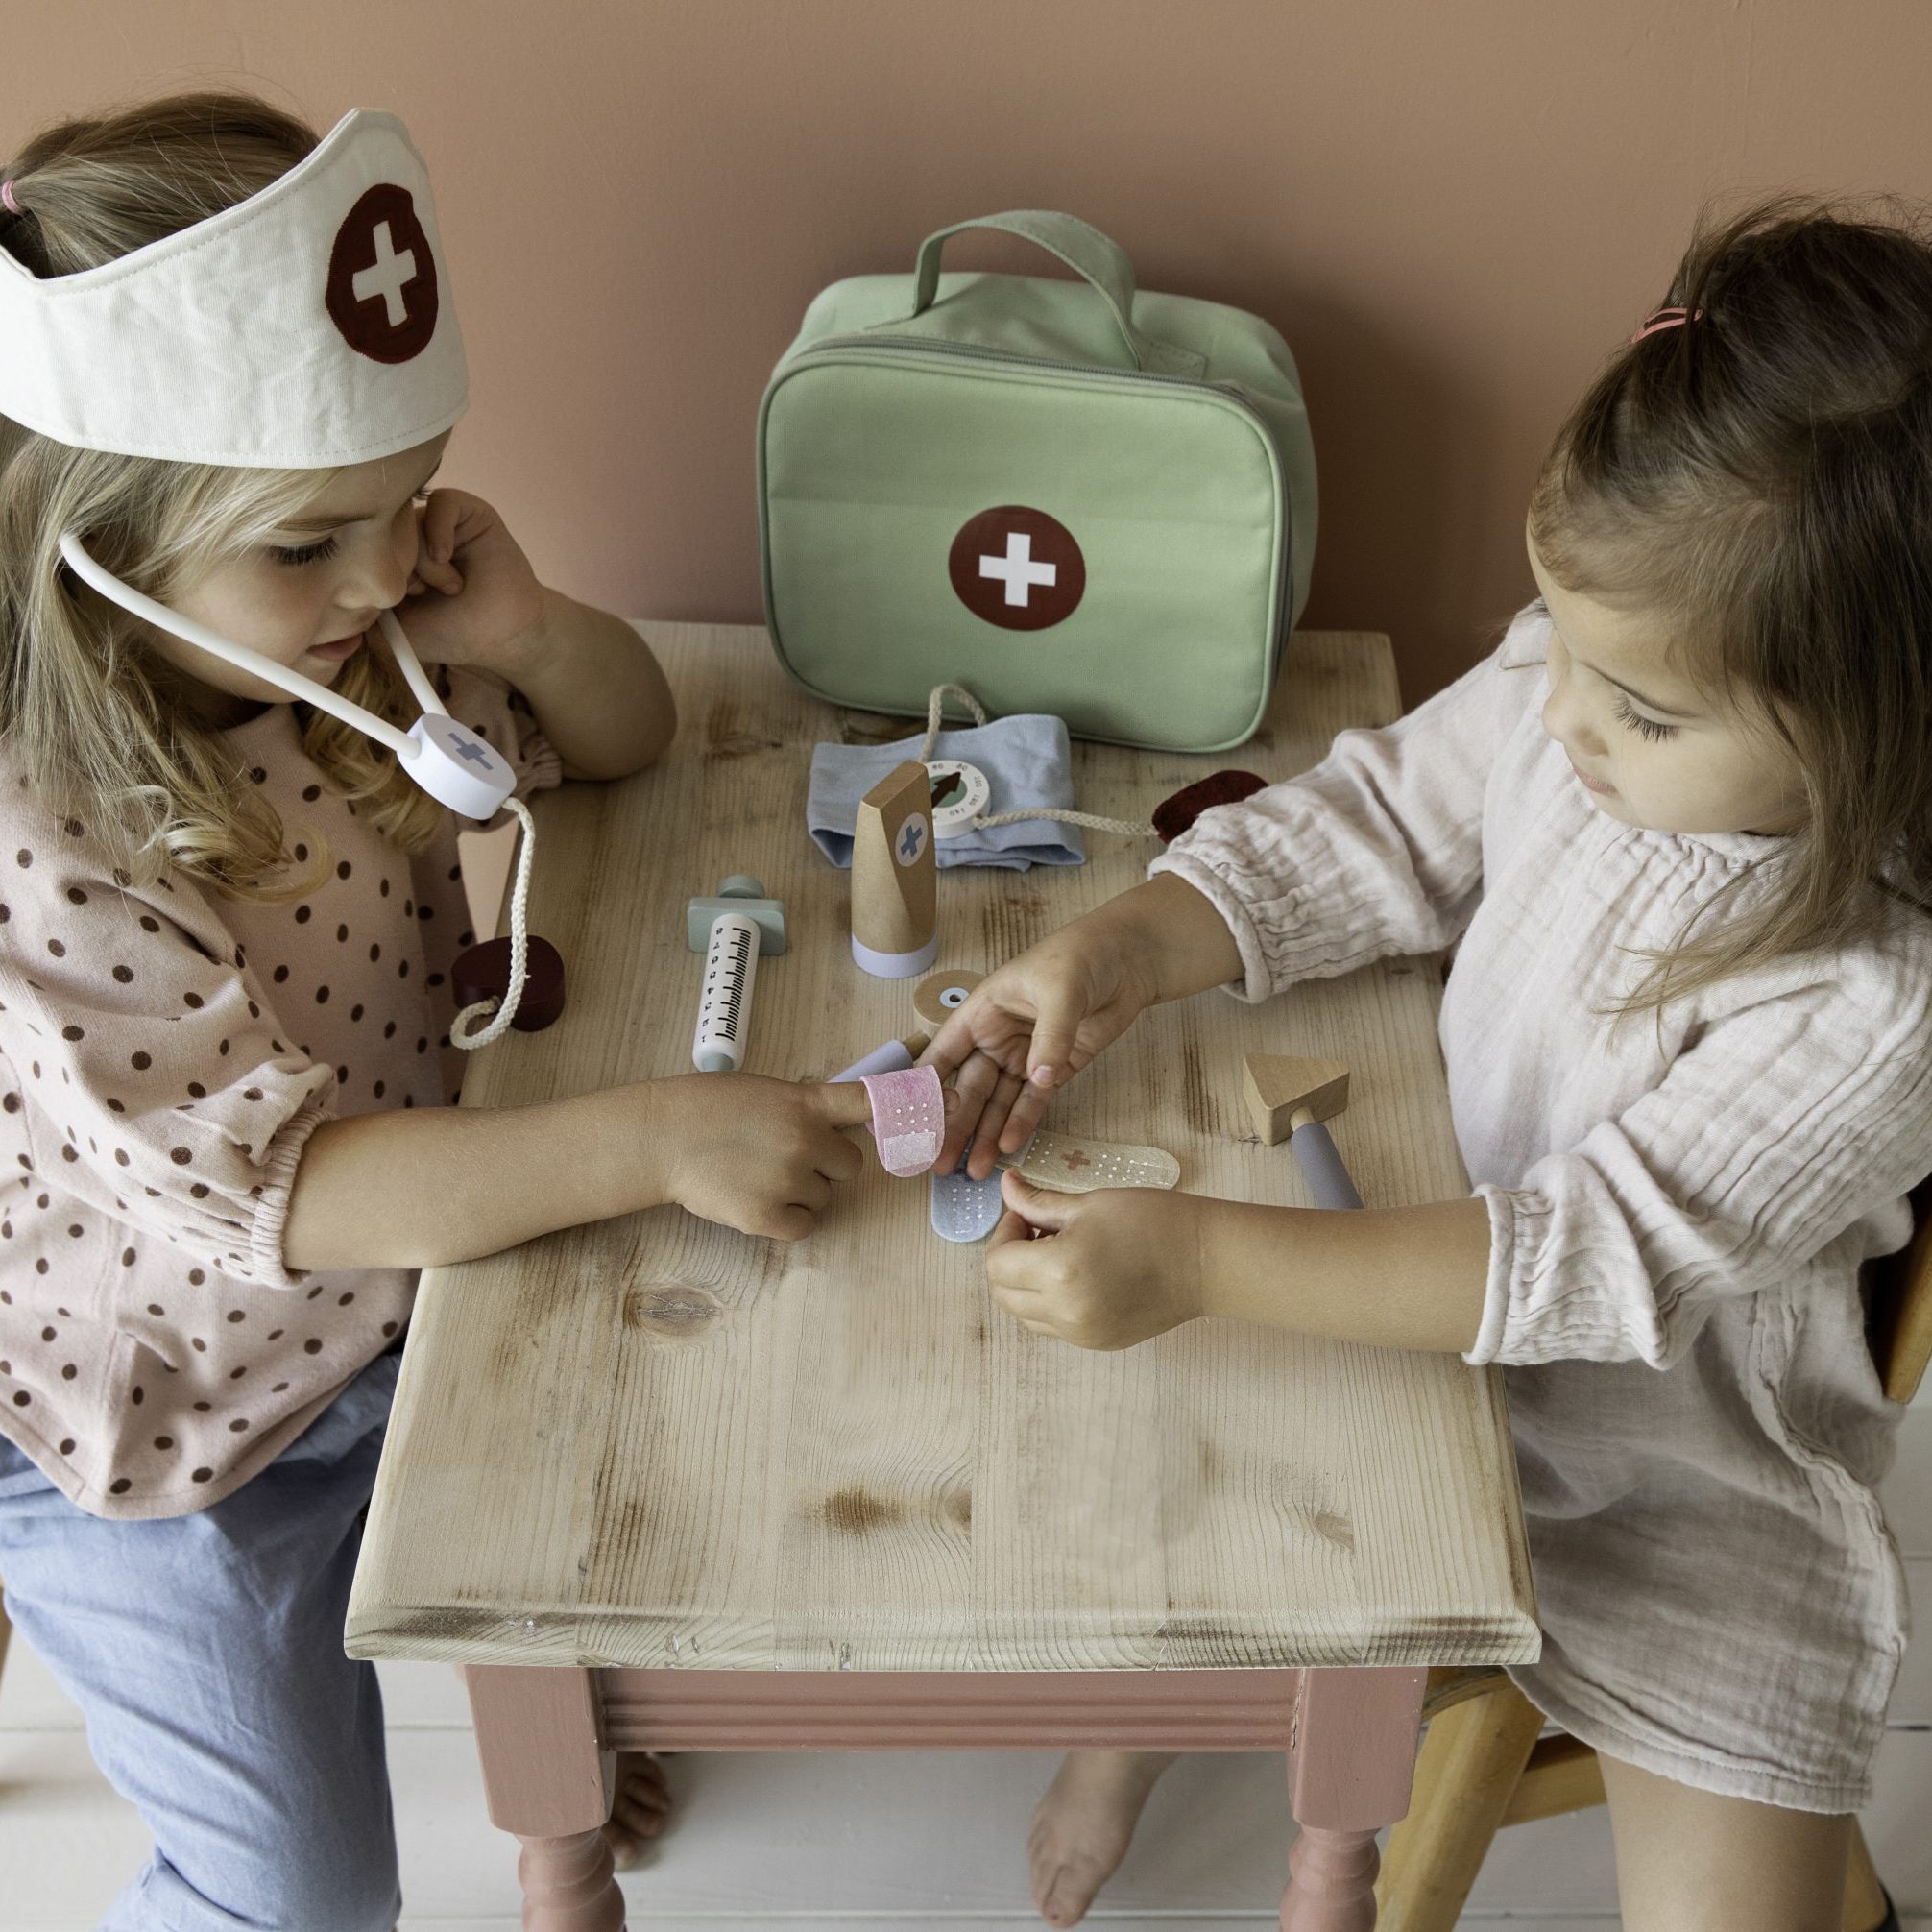 Mala de médico | Little Dutch Mini-Me - Baby & Kids Store